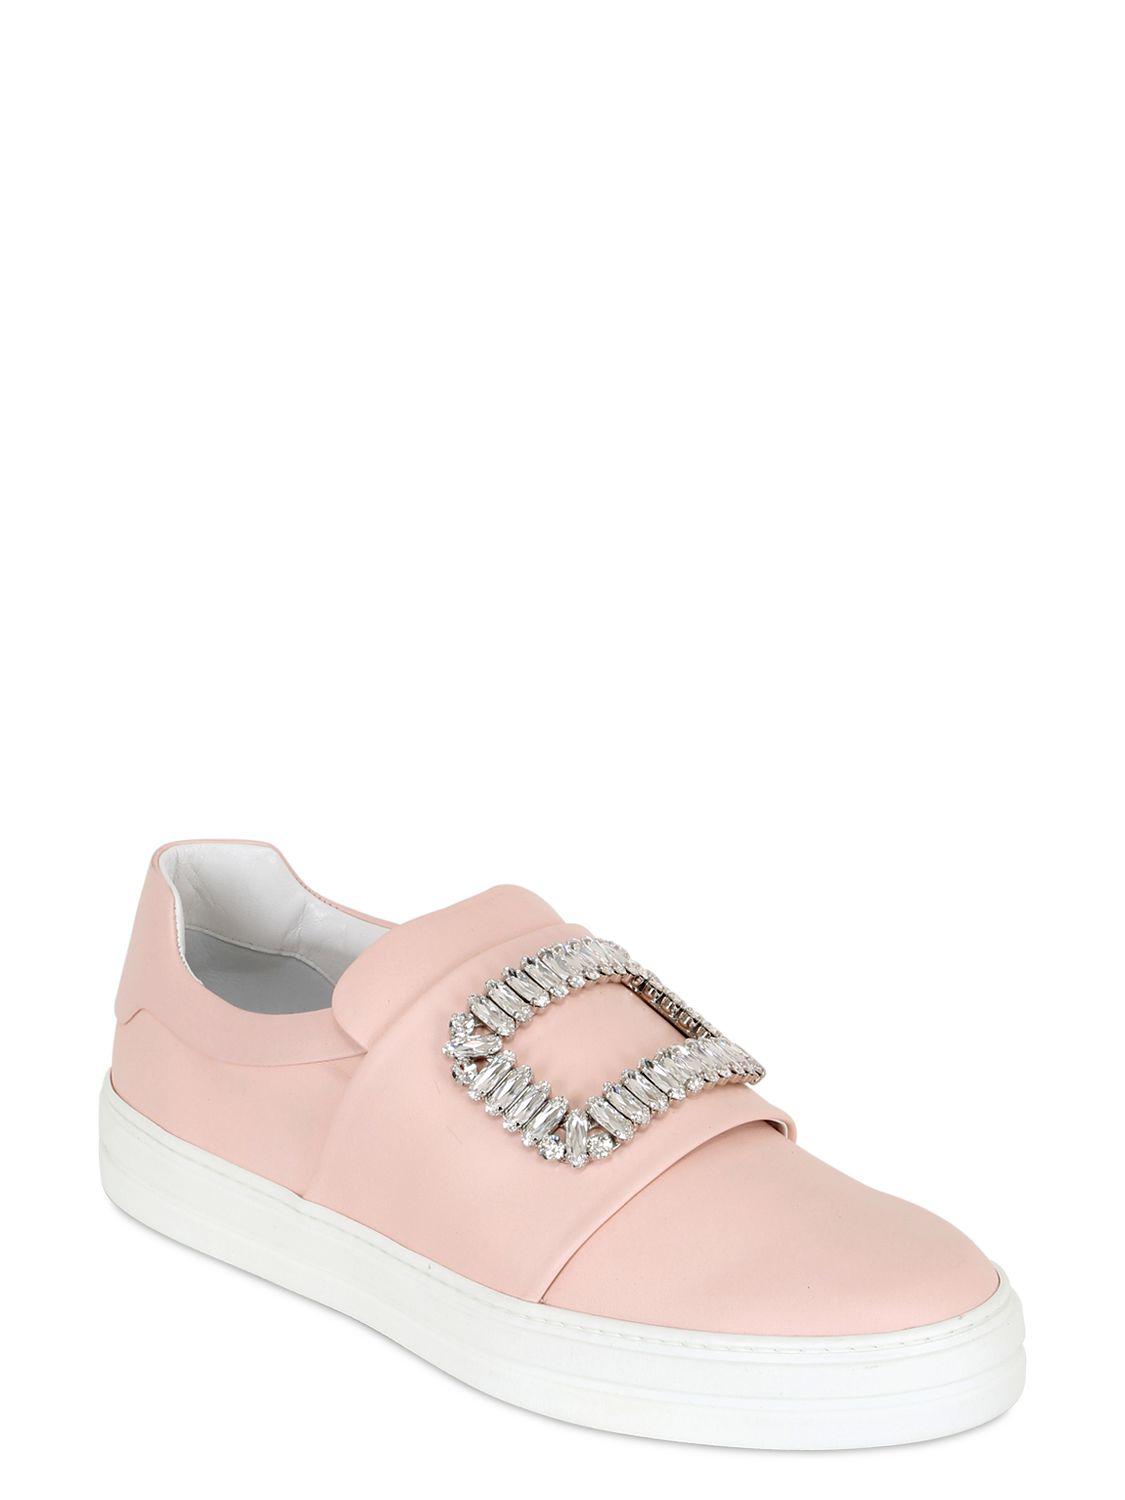 roger vivier pink shoes